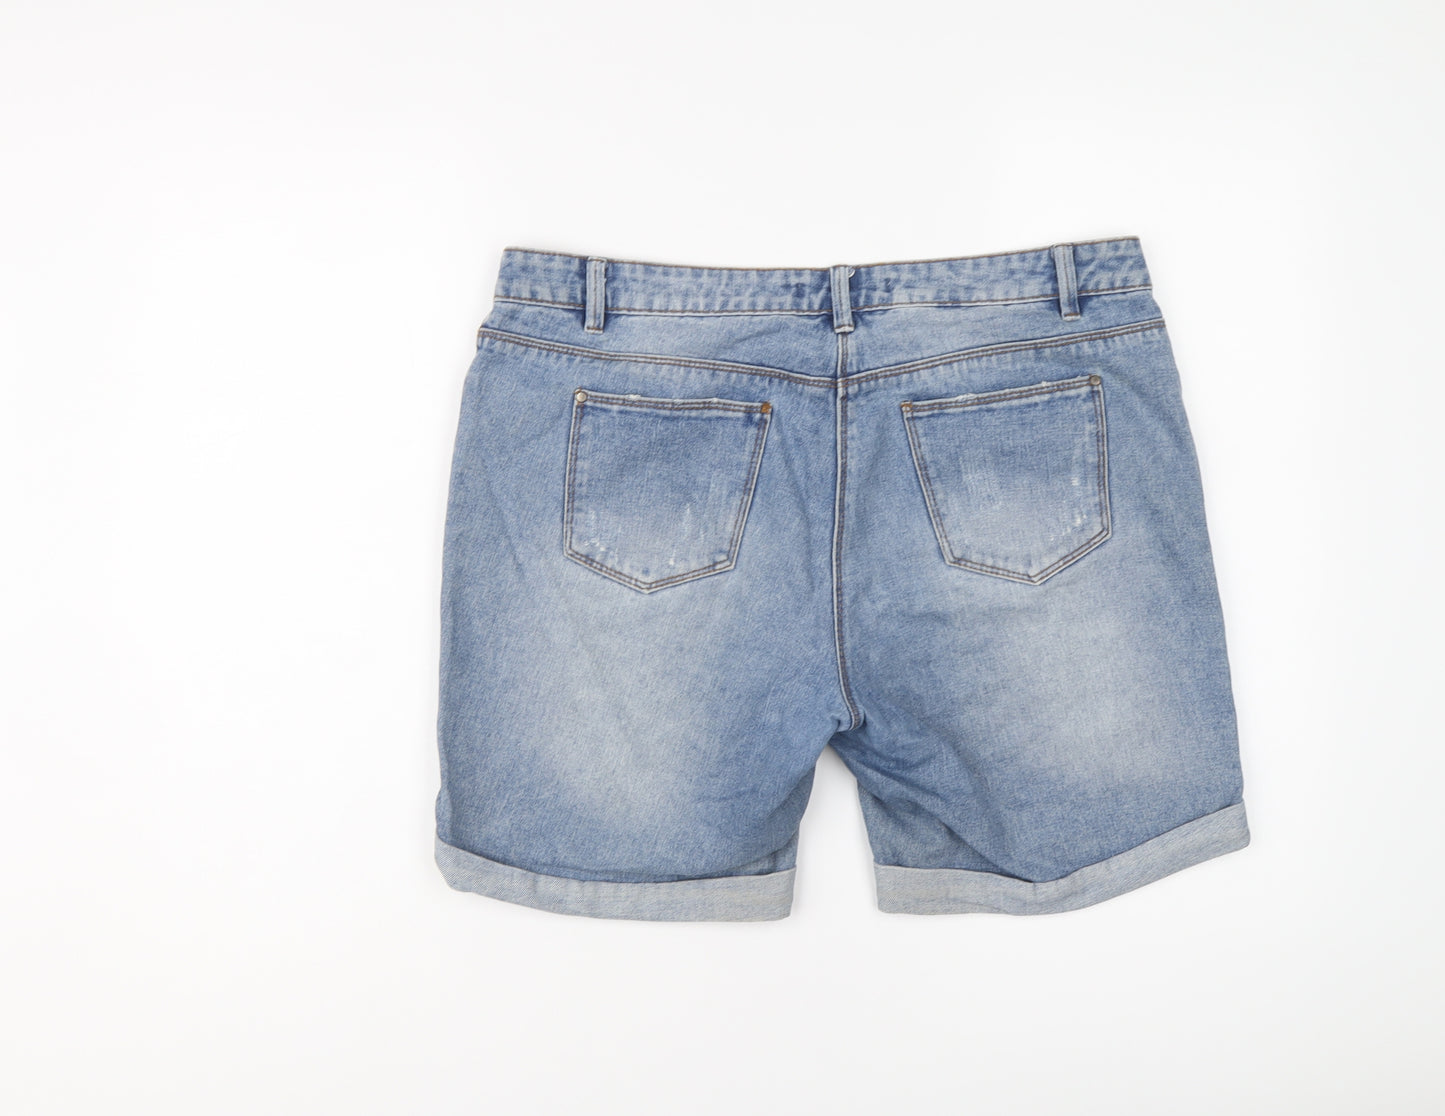 George Womens Blue Cotton Boyfriend Shorts Size 12 L7 in Regular Button - Distressed look